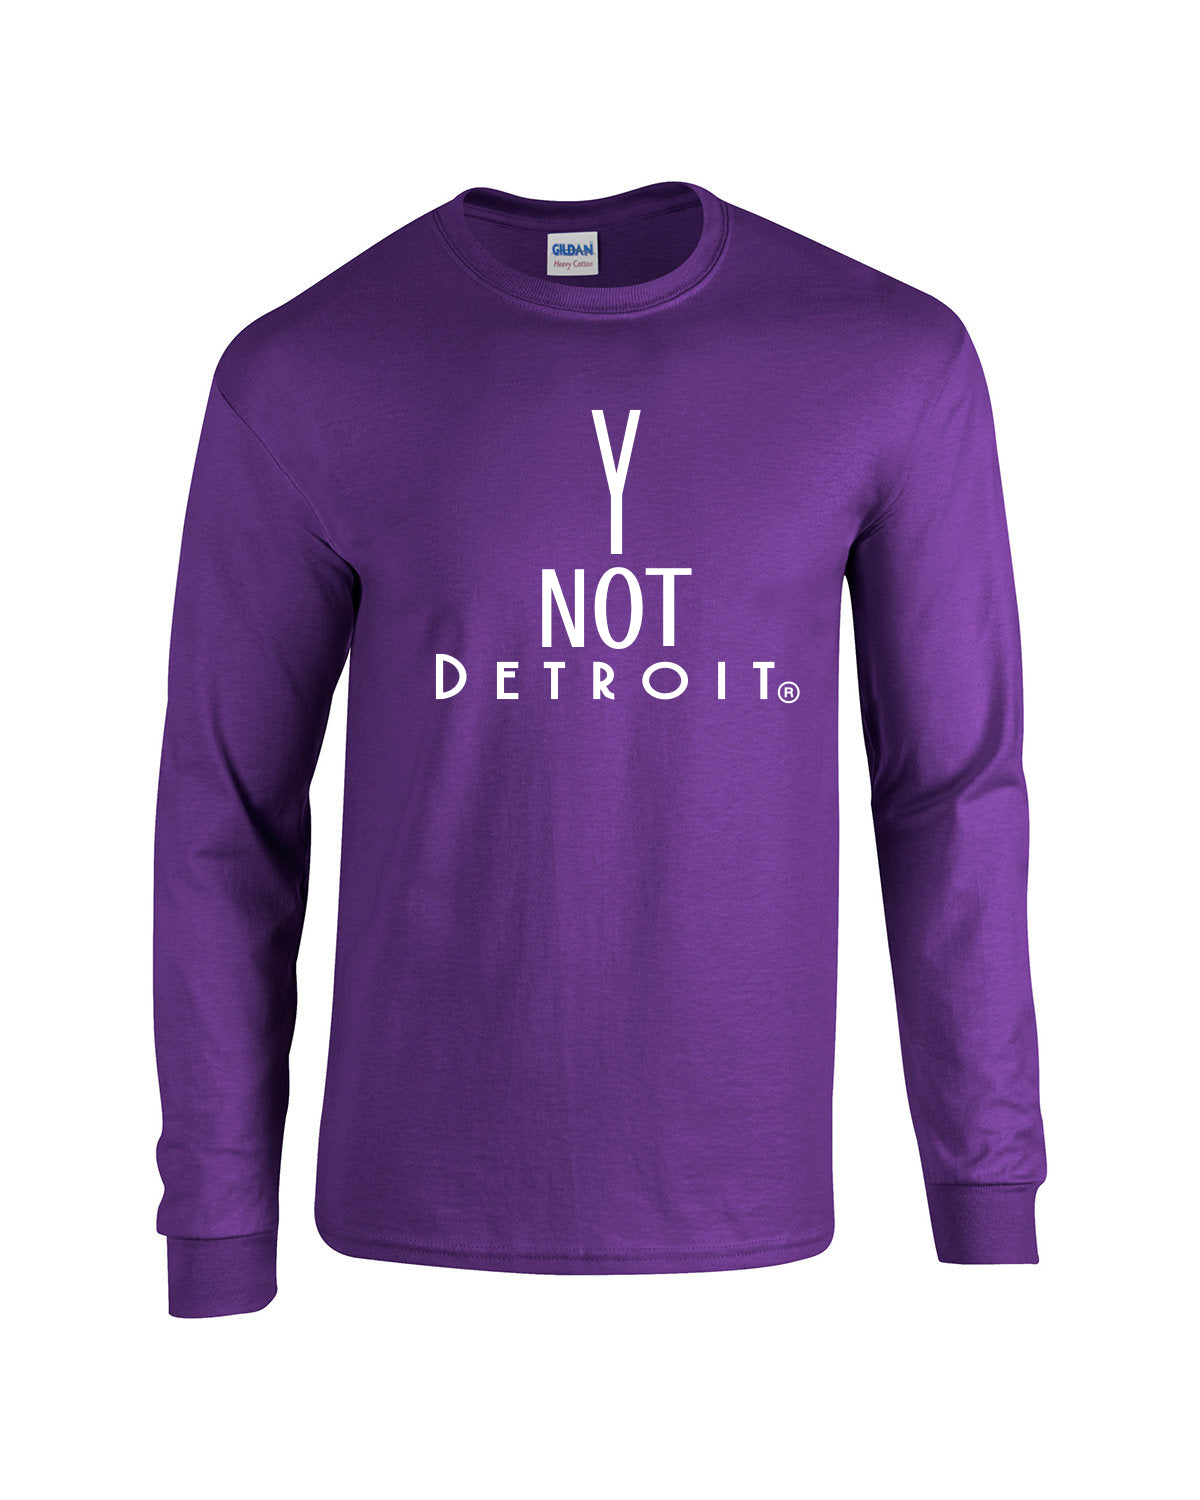 Y Not Detroit long sleeve logo tee.